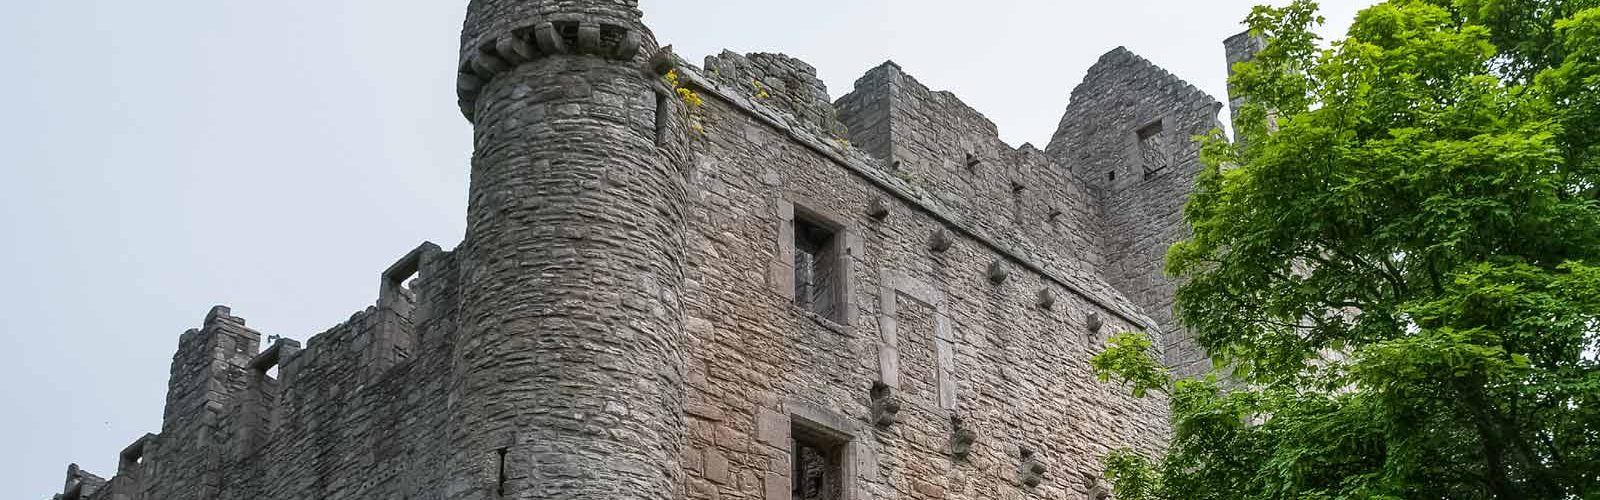 Ruins of Craigmillar Castle near Edinburgh